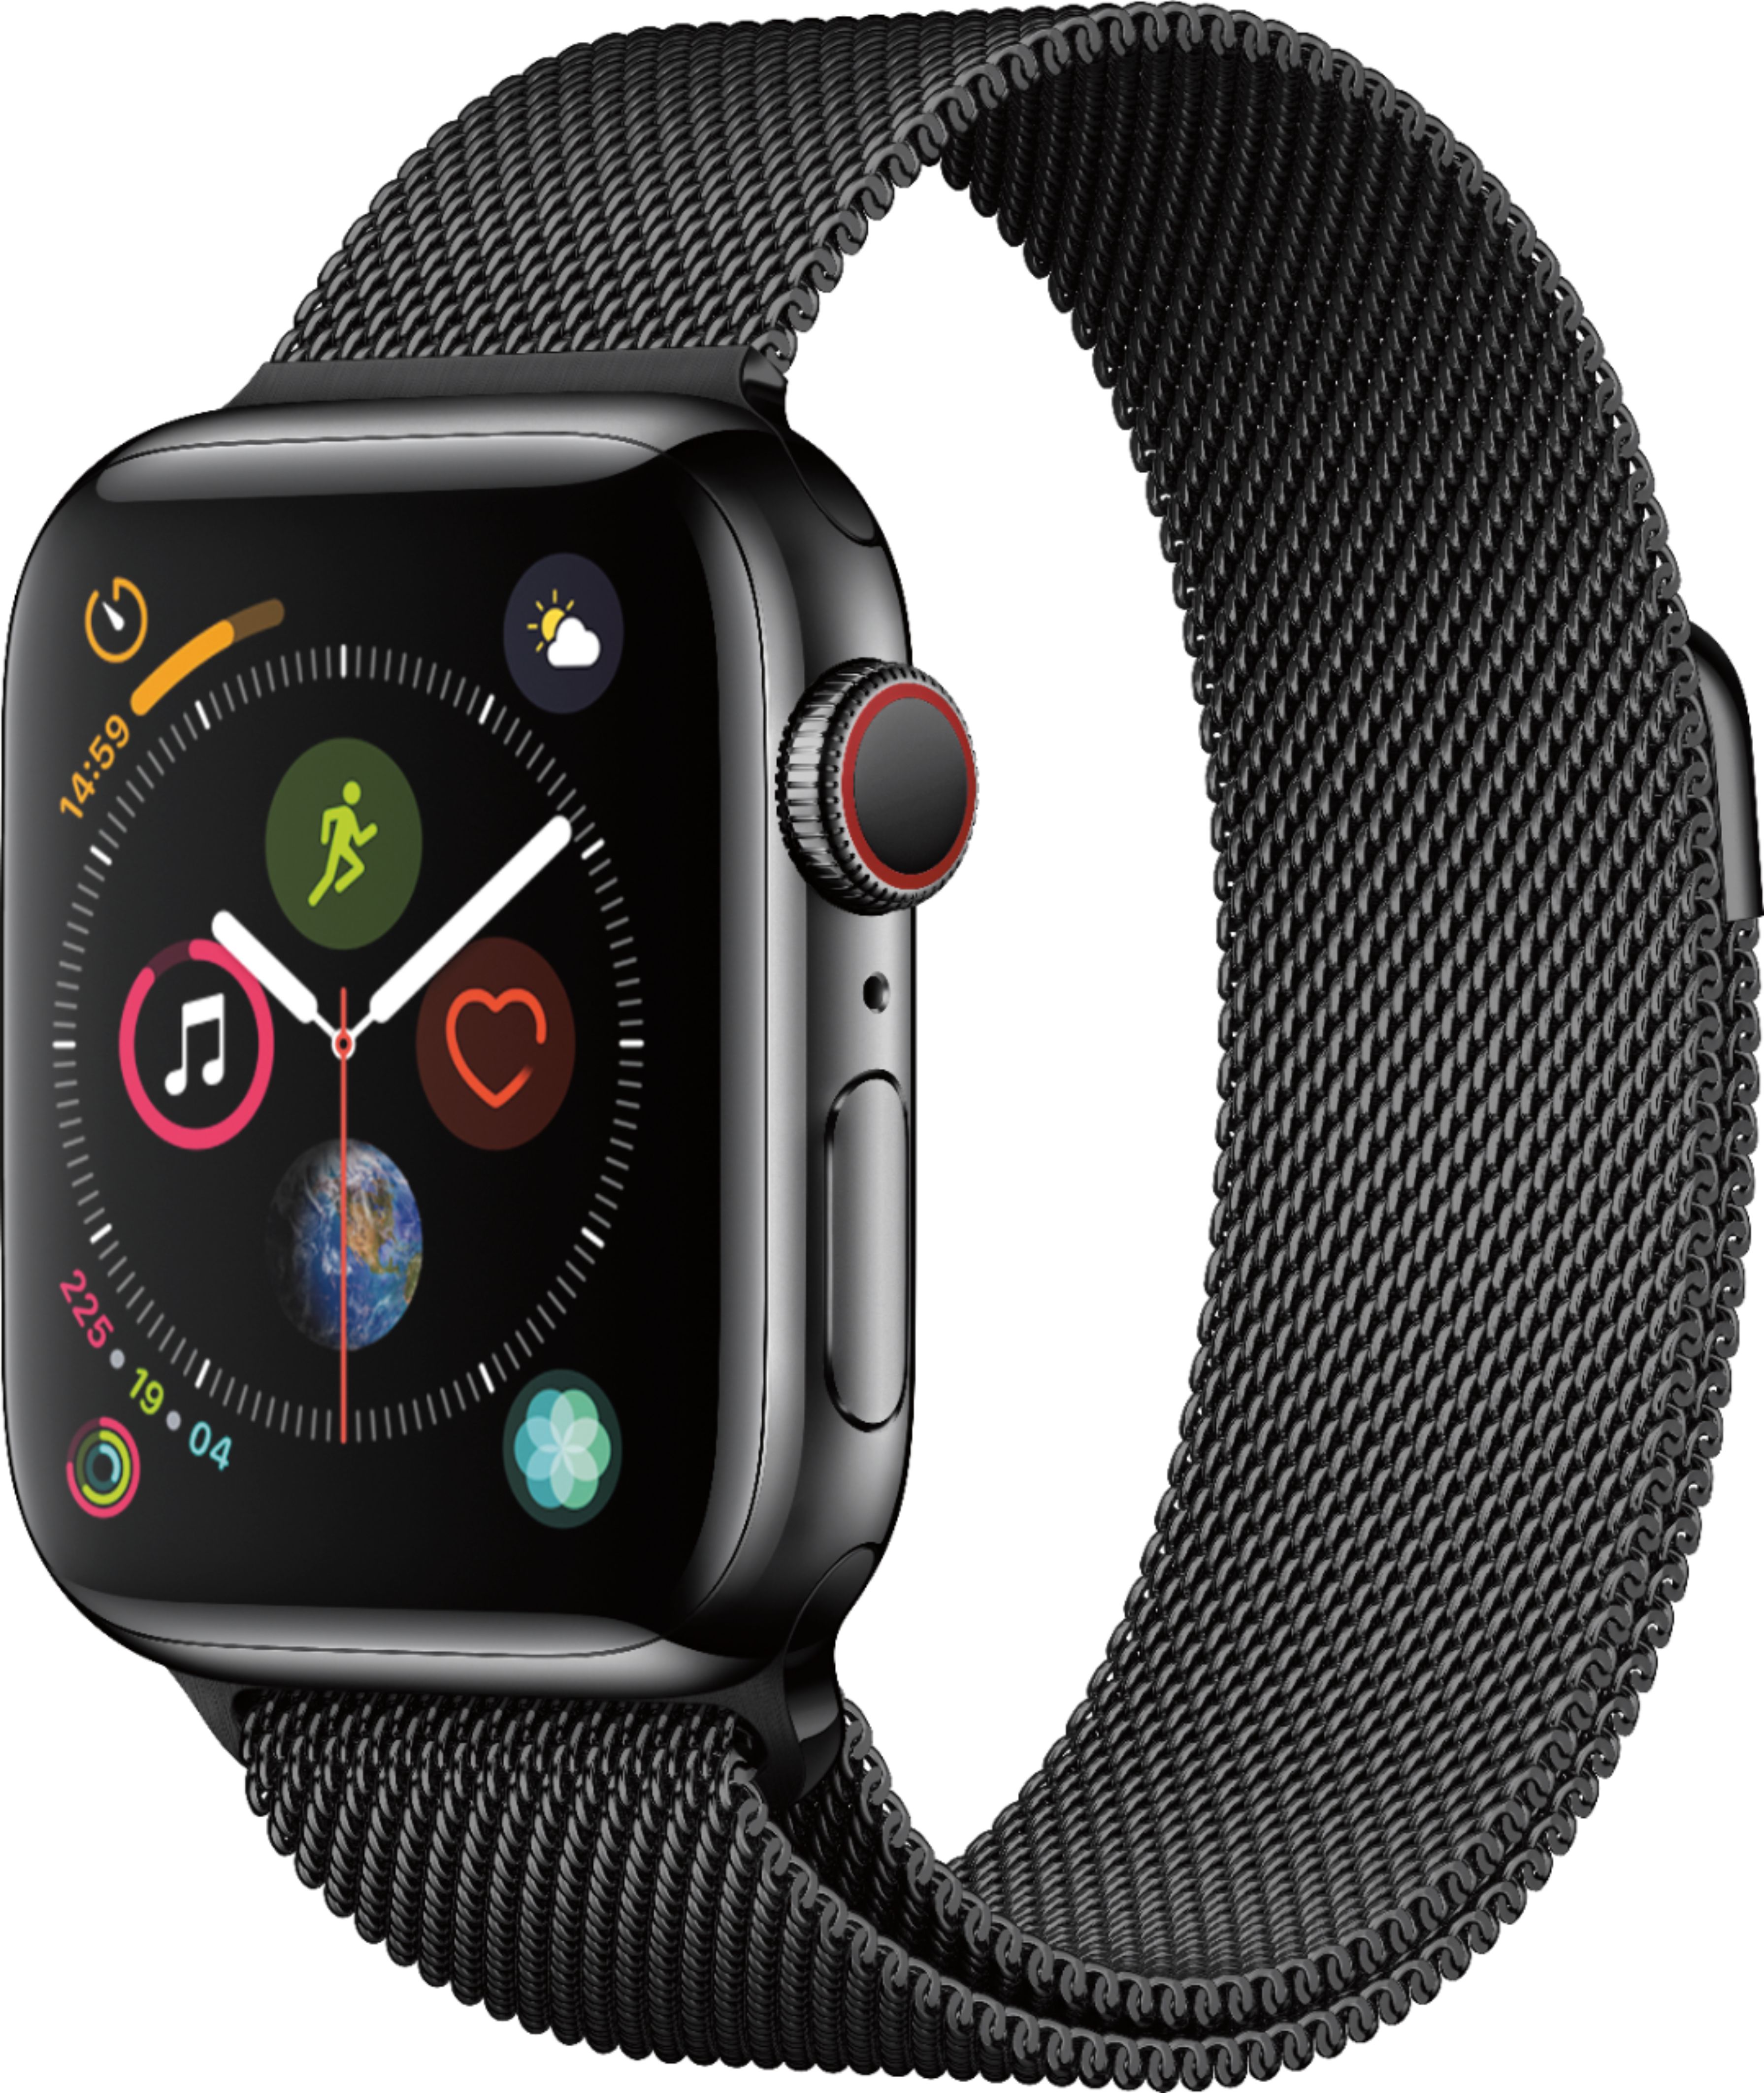 Geek Squad Certified Refurbished Apple Watch Series 4 (GPS + Cellular) 40mm Stainless Steel Case with Milanese Loop - Space Black Stainless Steel